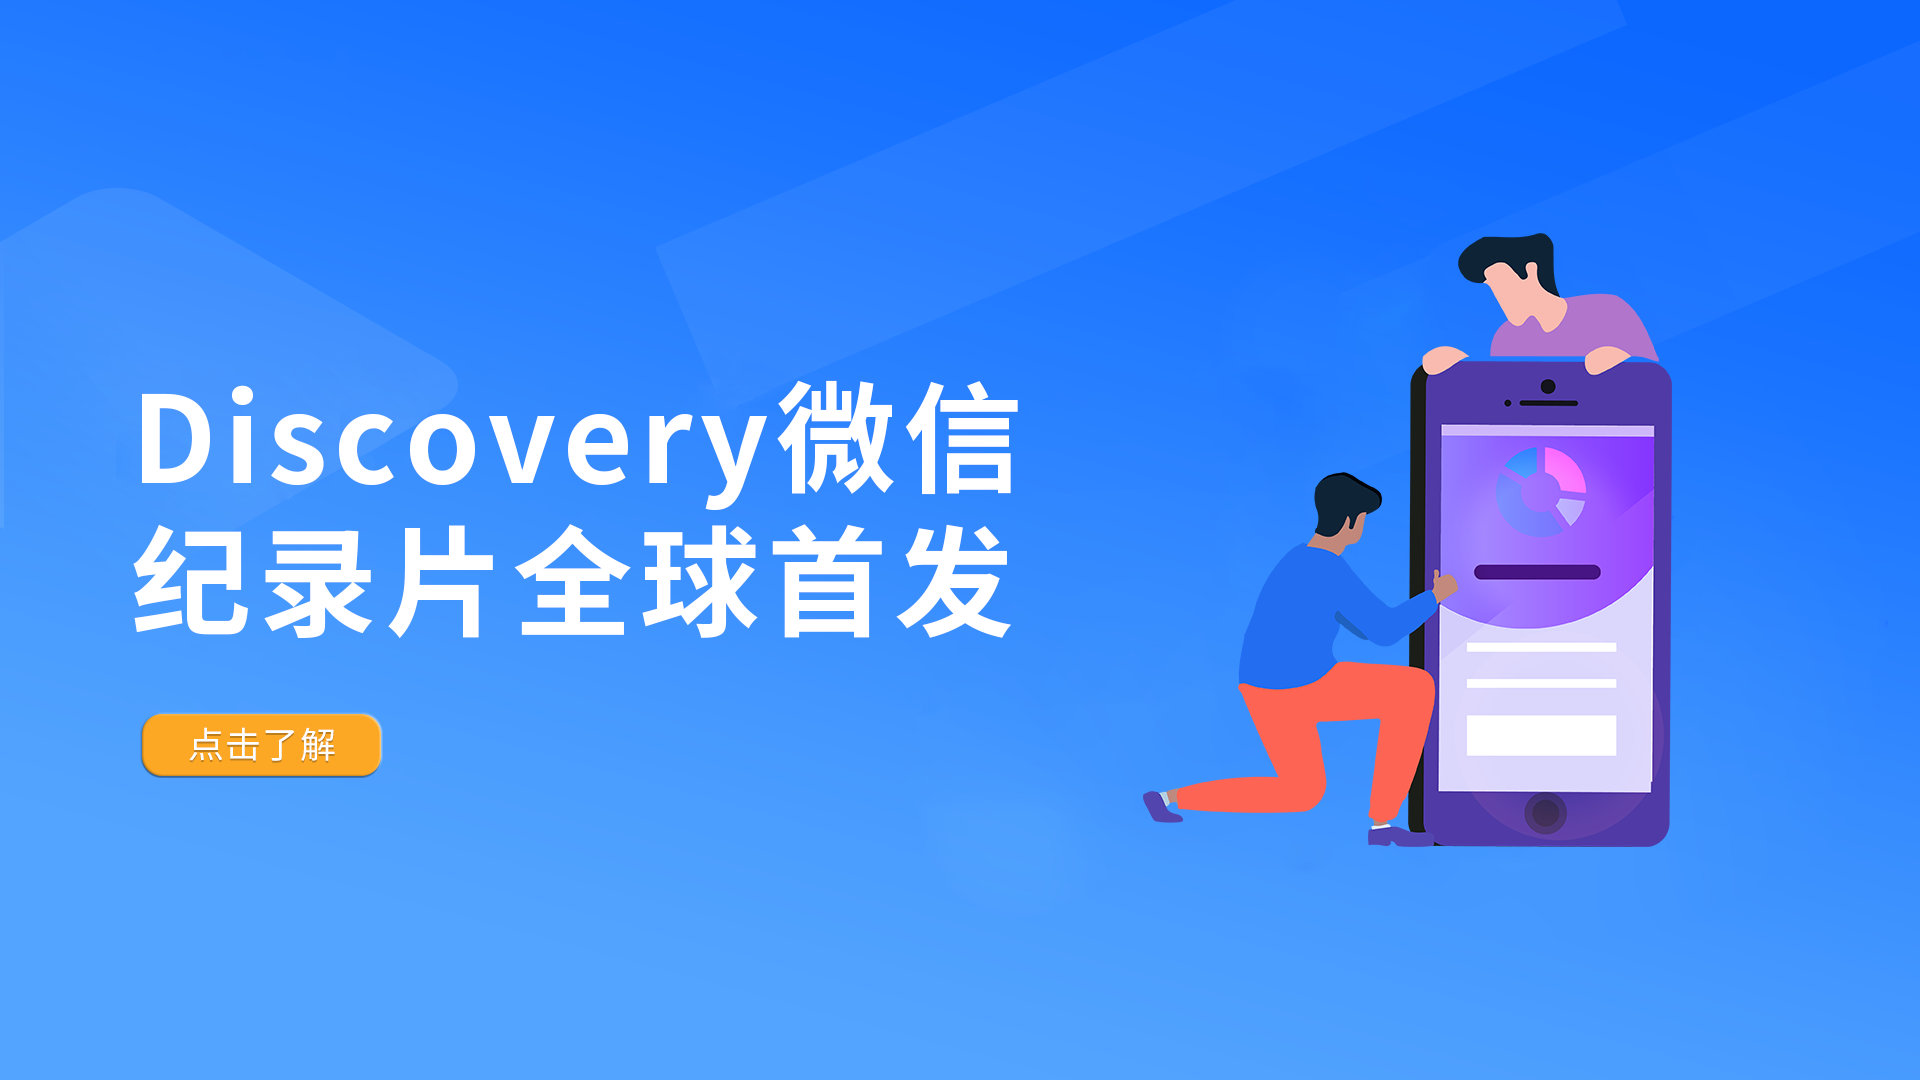 Discovery 微信纪录片全球首发